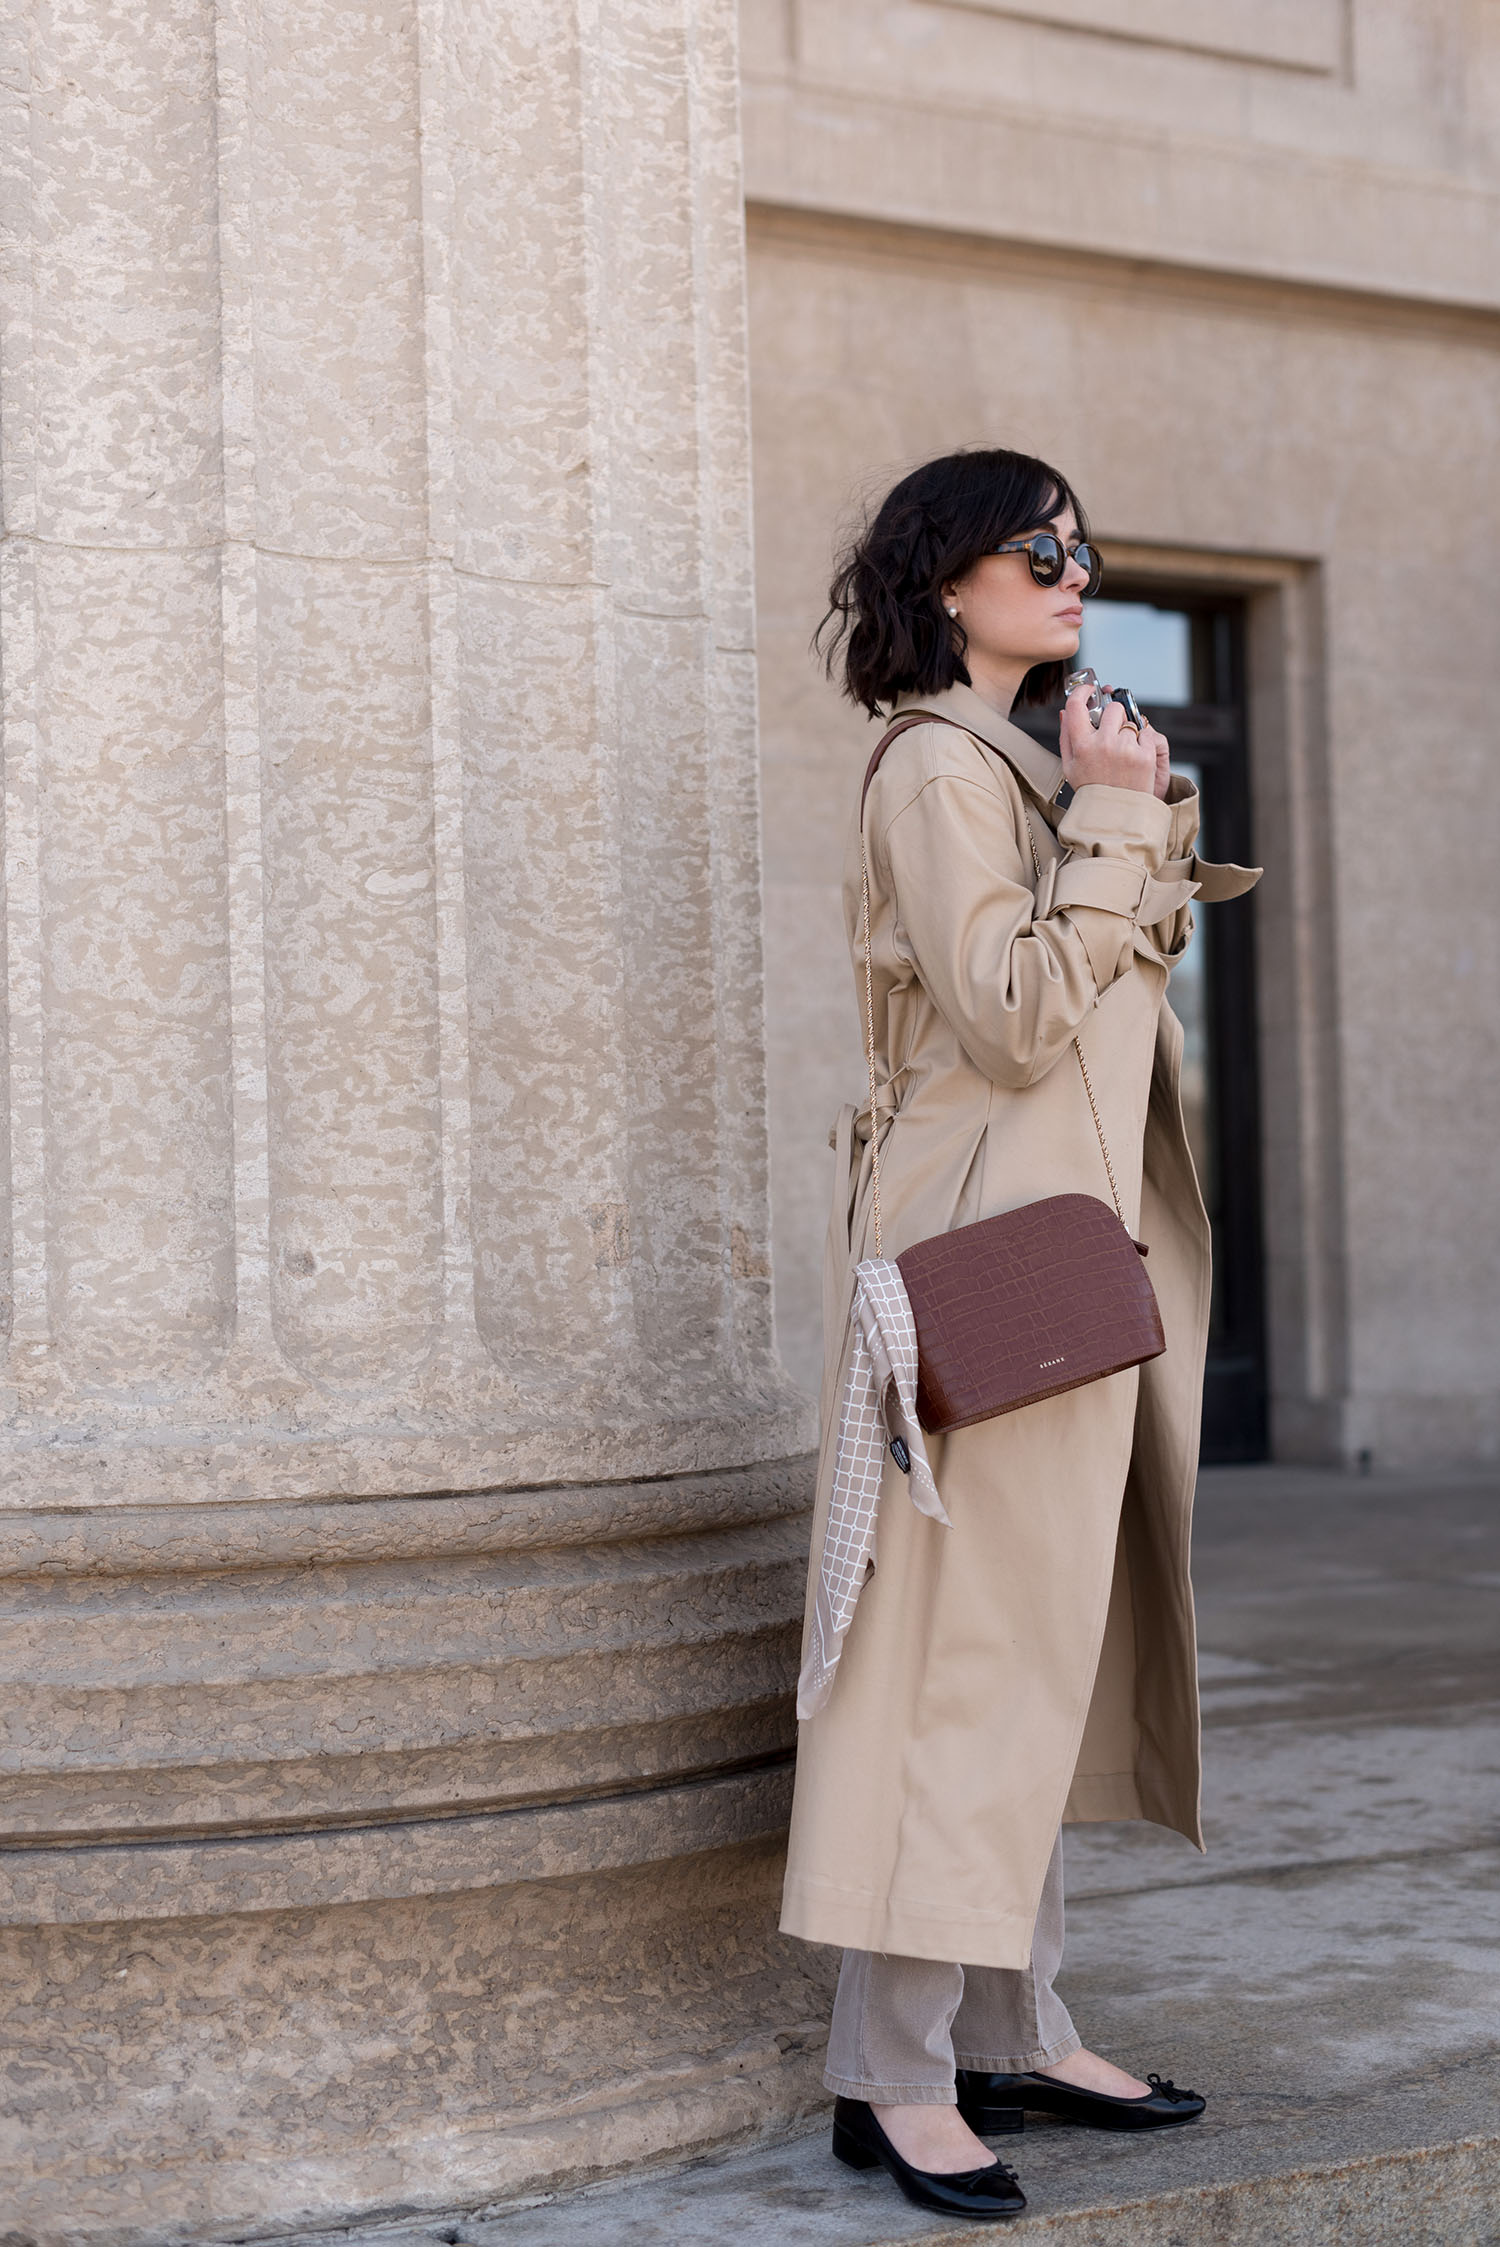 Top Winnipeg fashion blogger Cee Fardoe of Coco & Vera wears an H&M trench and carries a Sezane handbag at the Manitoba Legislature